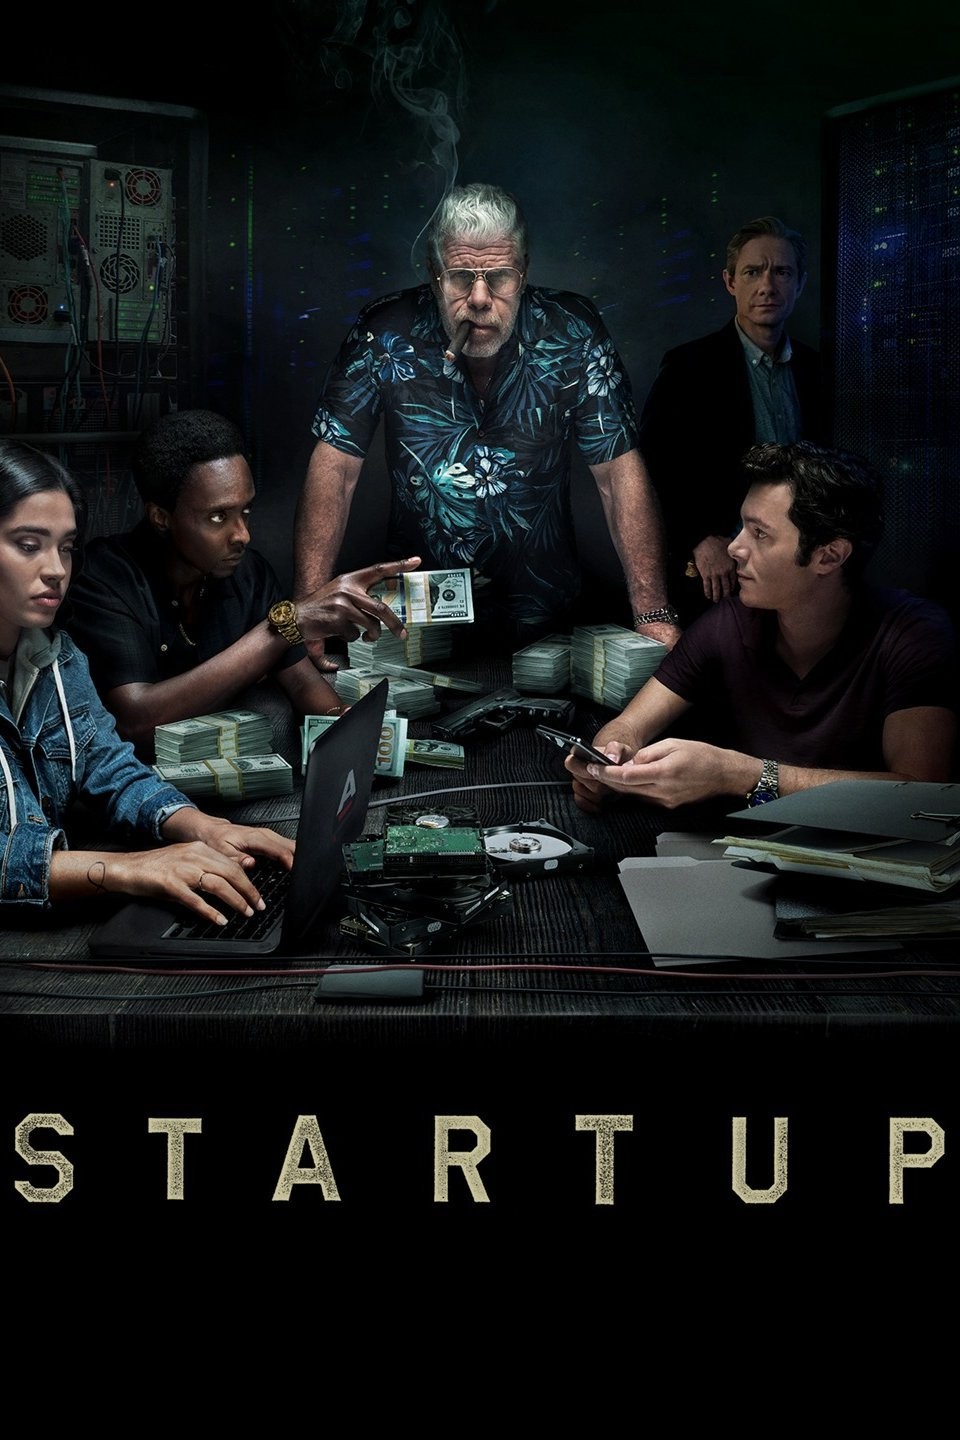 StartUp (2017) สตาร์ตอัป Season 2